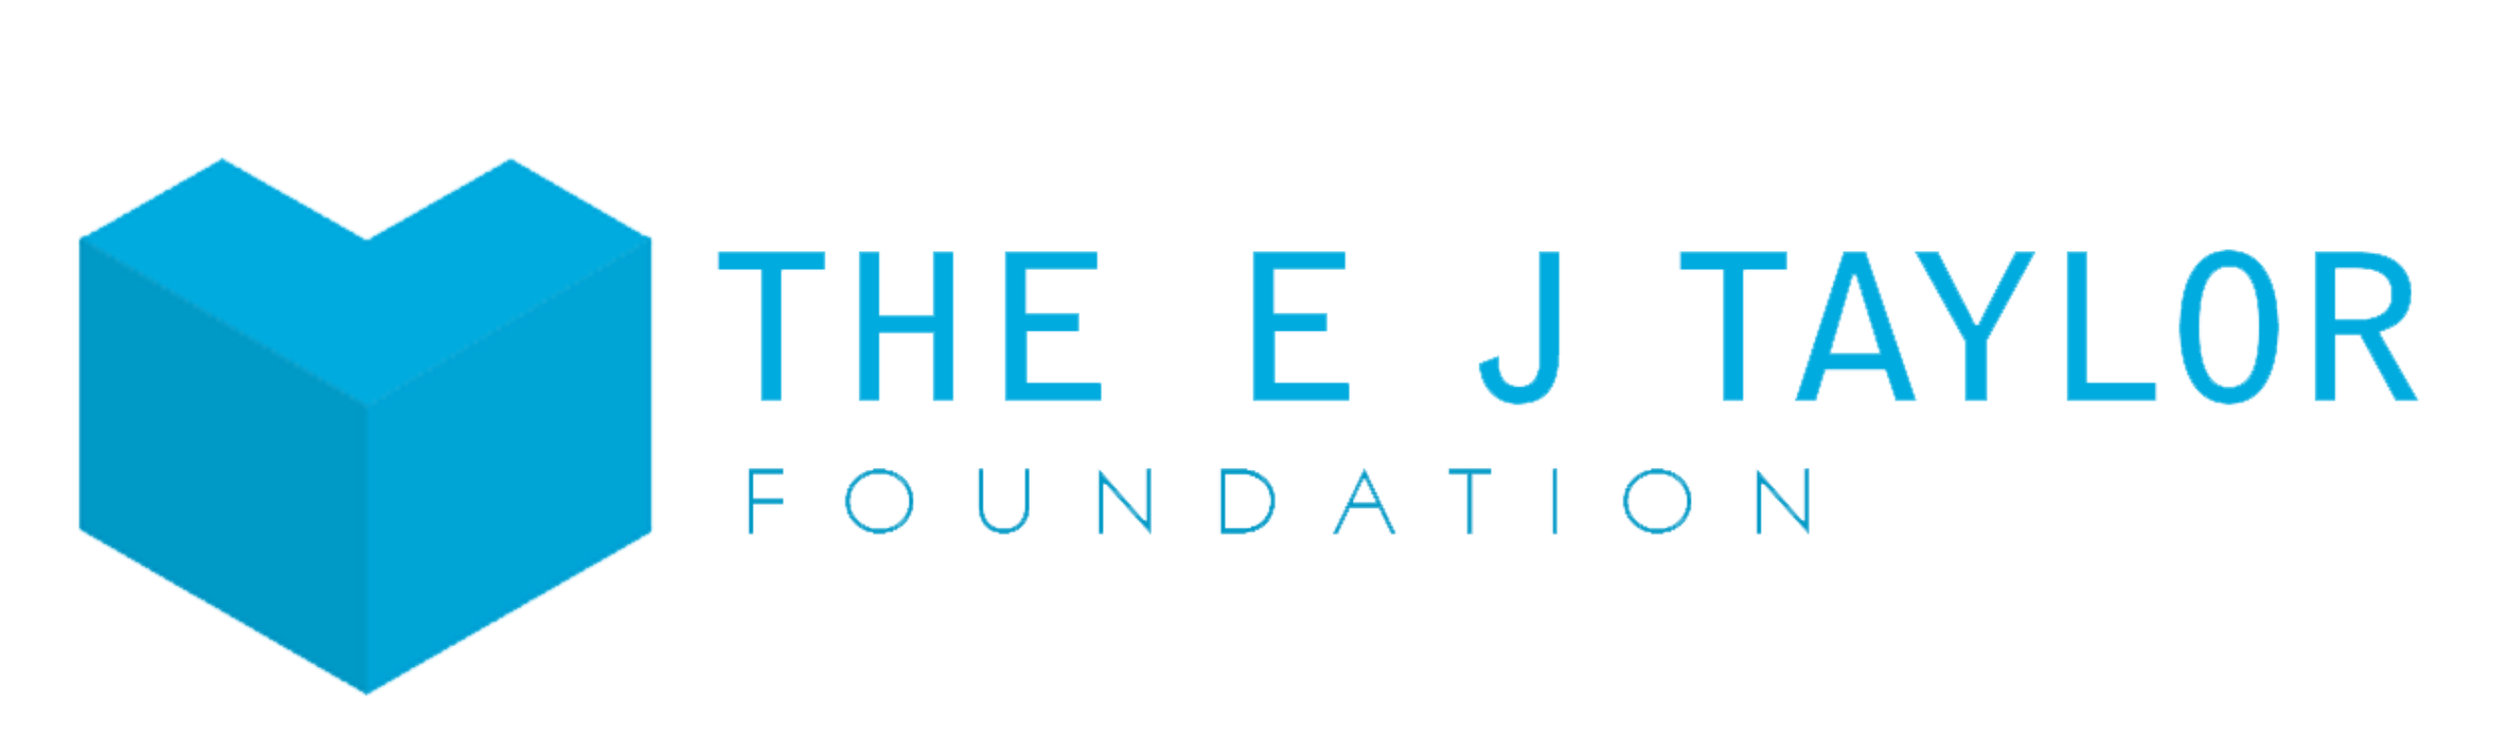 The E J Taylor Foundation